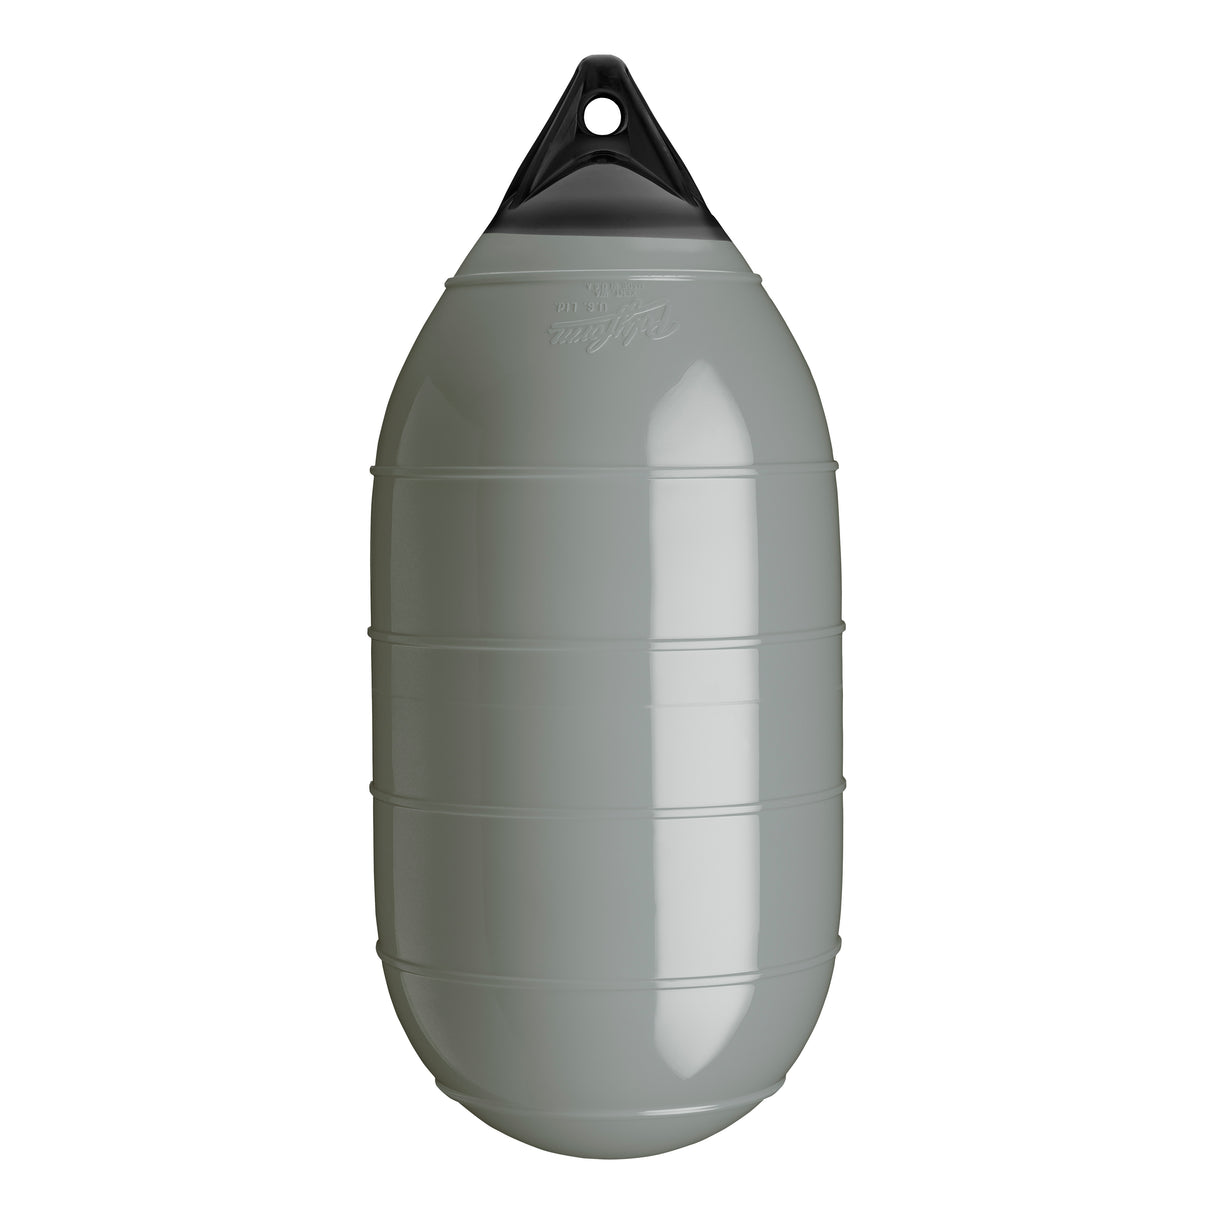 Grey low drag buoy with Black-Top, Polyform LD-3 